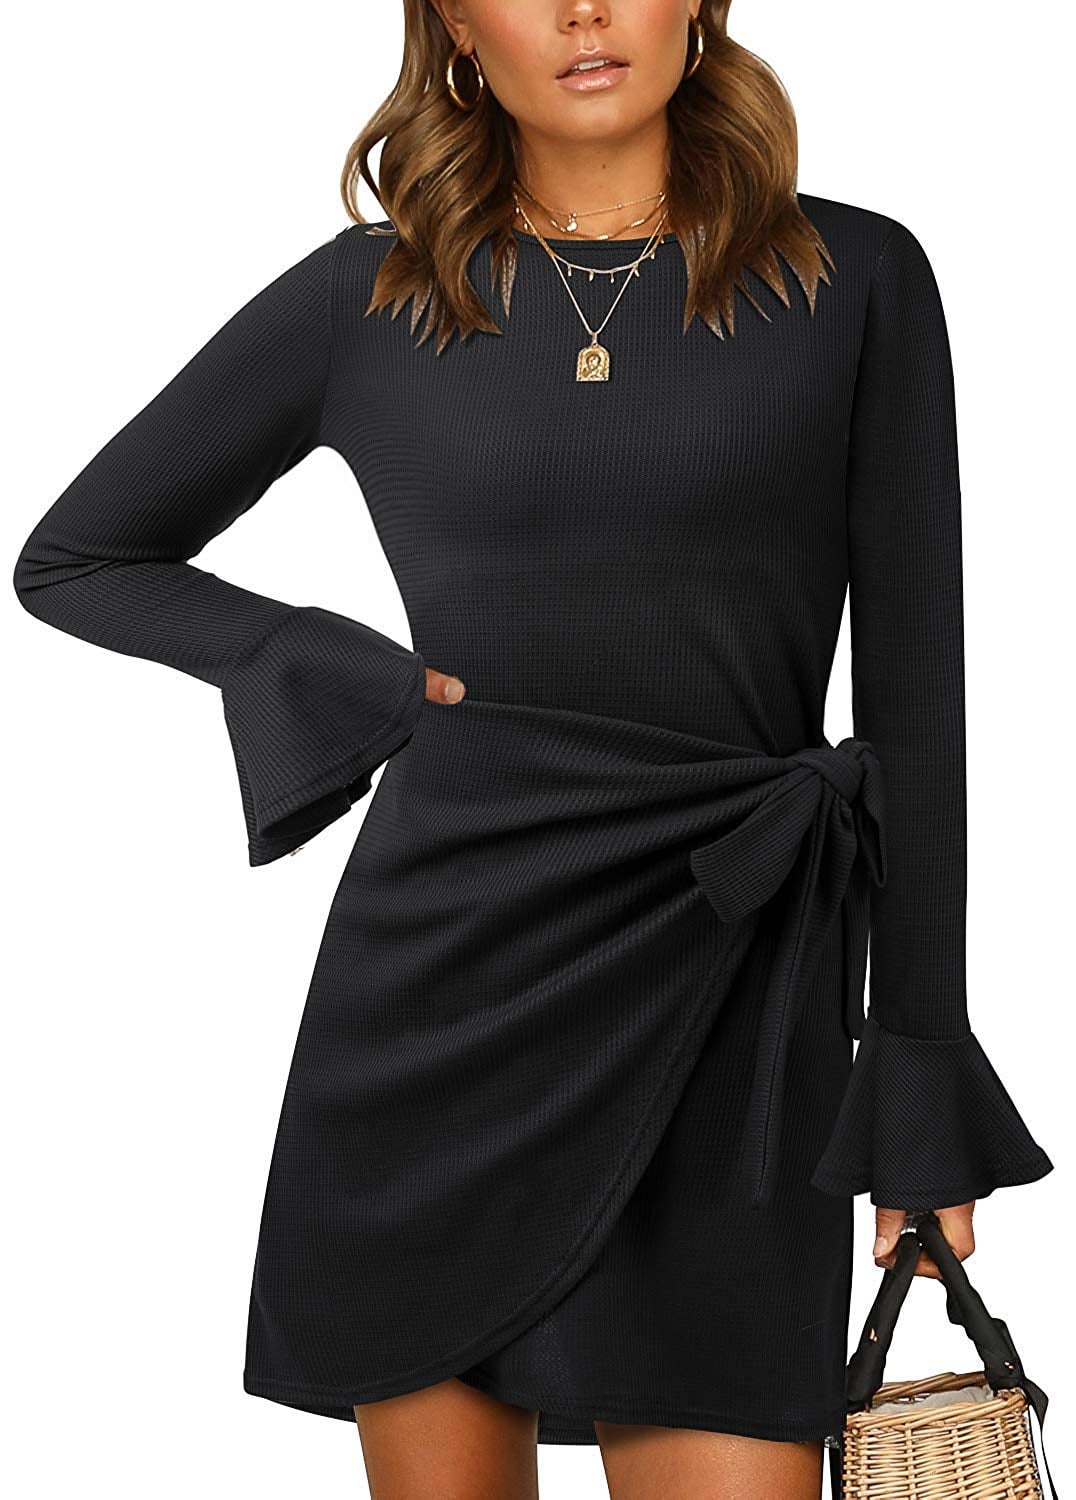 Best Black Dresses on Amazon Fashion 2020 | POPSUGAR Fashion